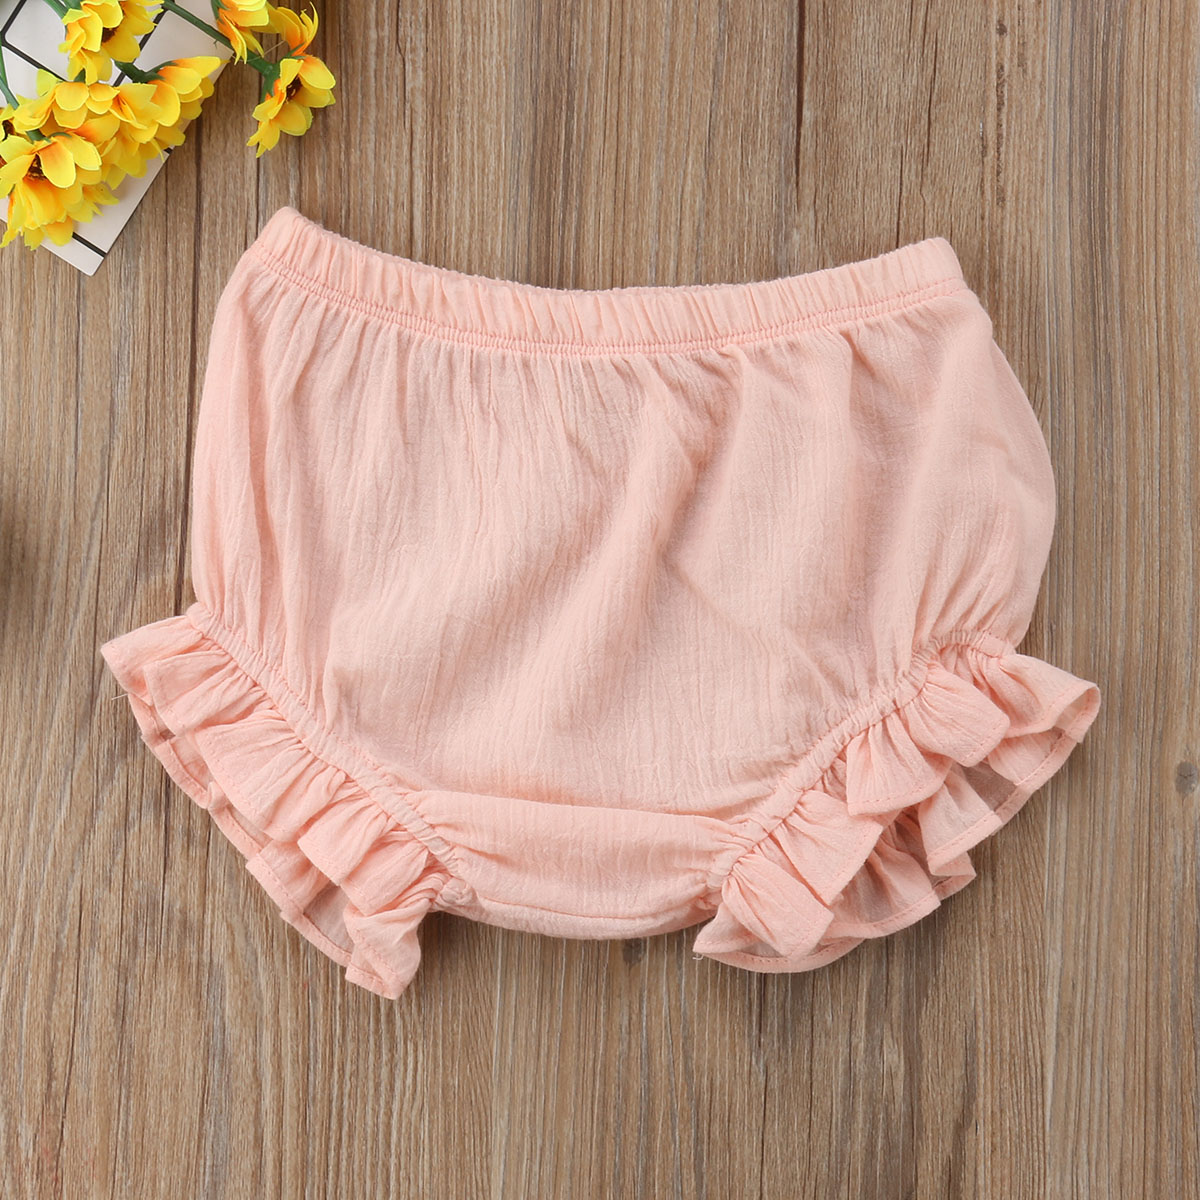 2018 Toddler Infant Baby Boy Girl Kid Tassel Solid Pants Shorts Bottoms PP Bloomers Summer Cute Panties